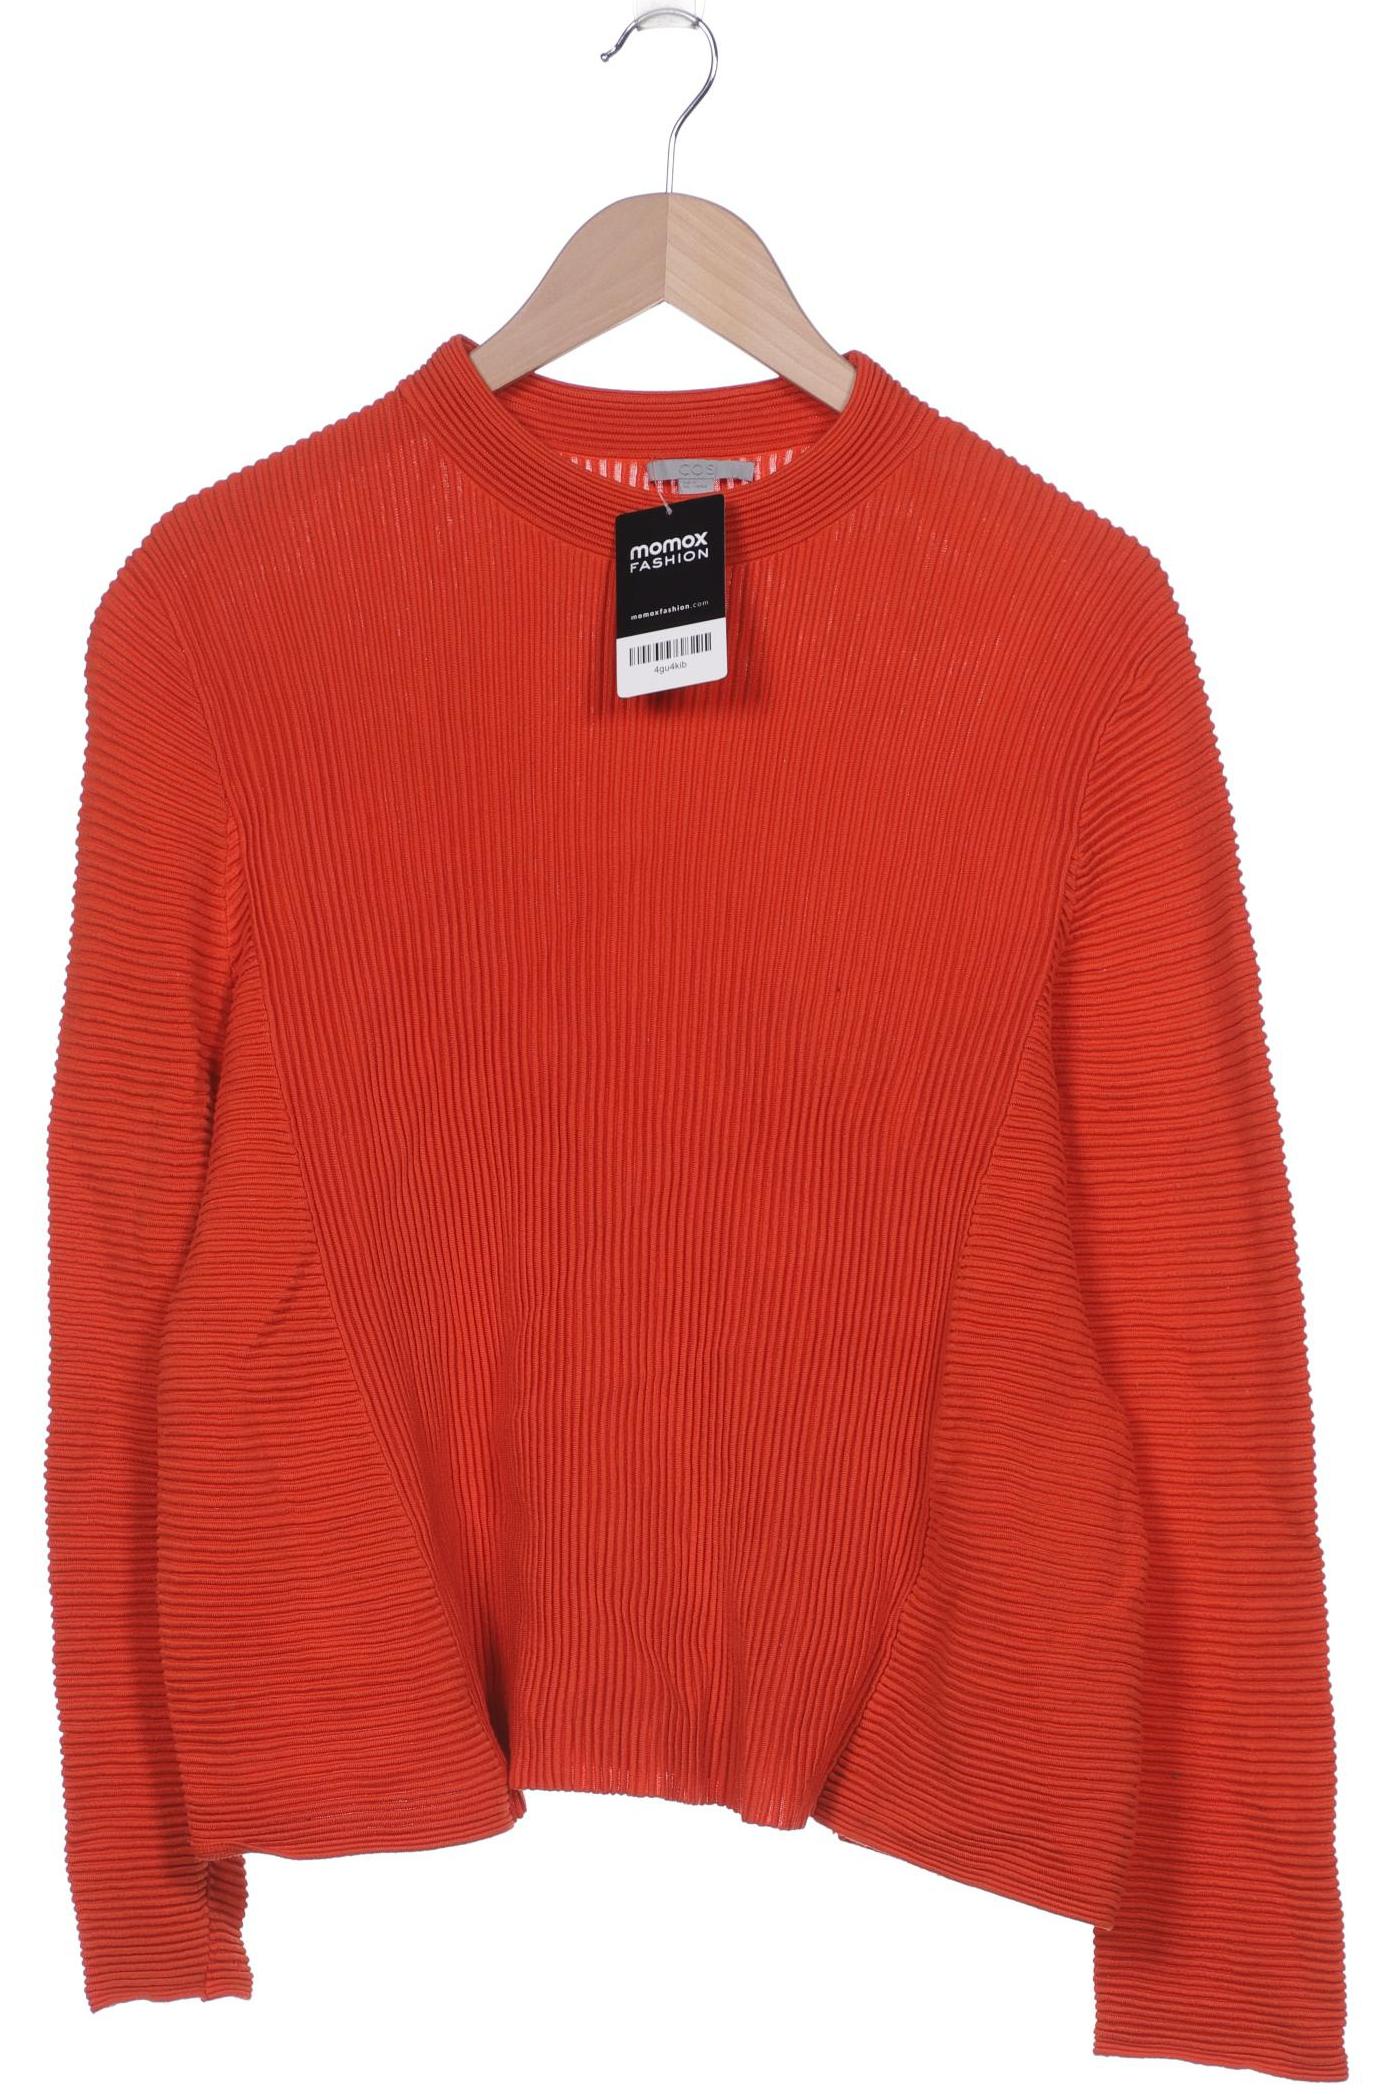 COS Damen Pullover, orange von COS